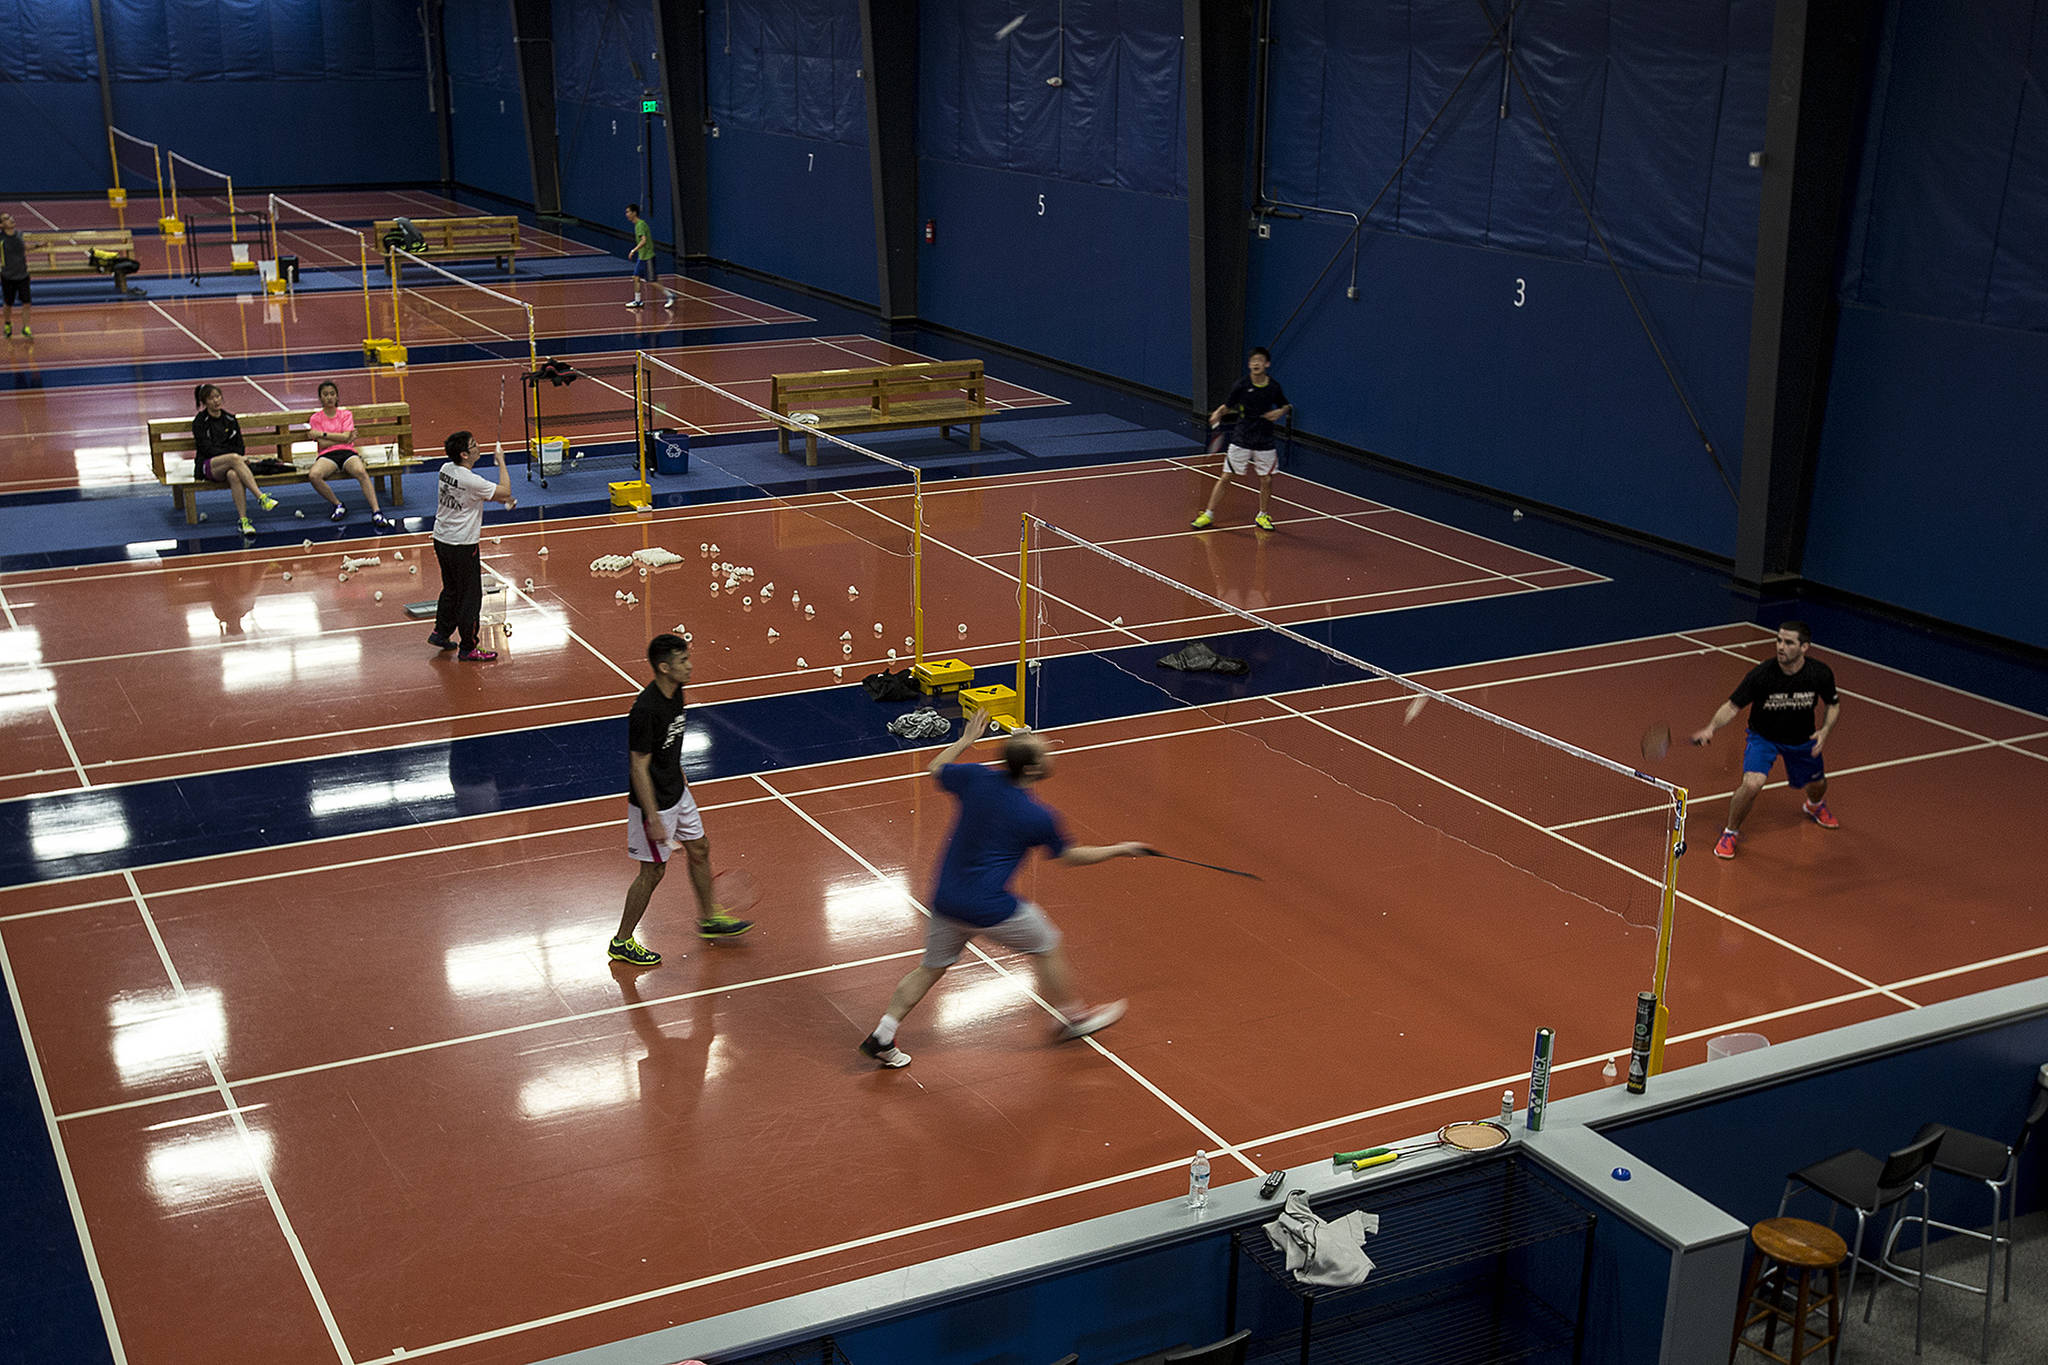 USA Badminton Adult Nationals headed to Mukilteo | HeraldNet.com